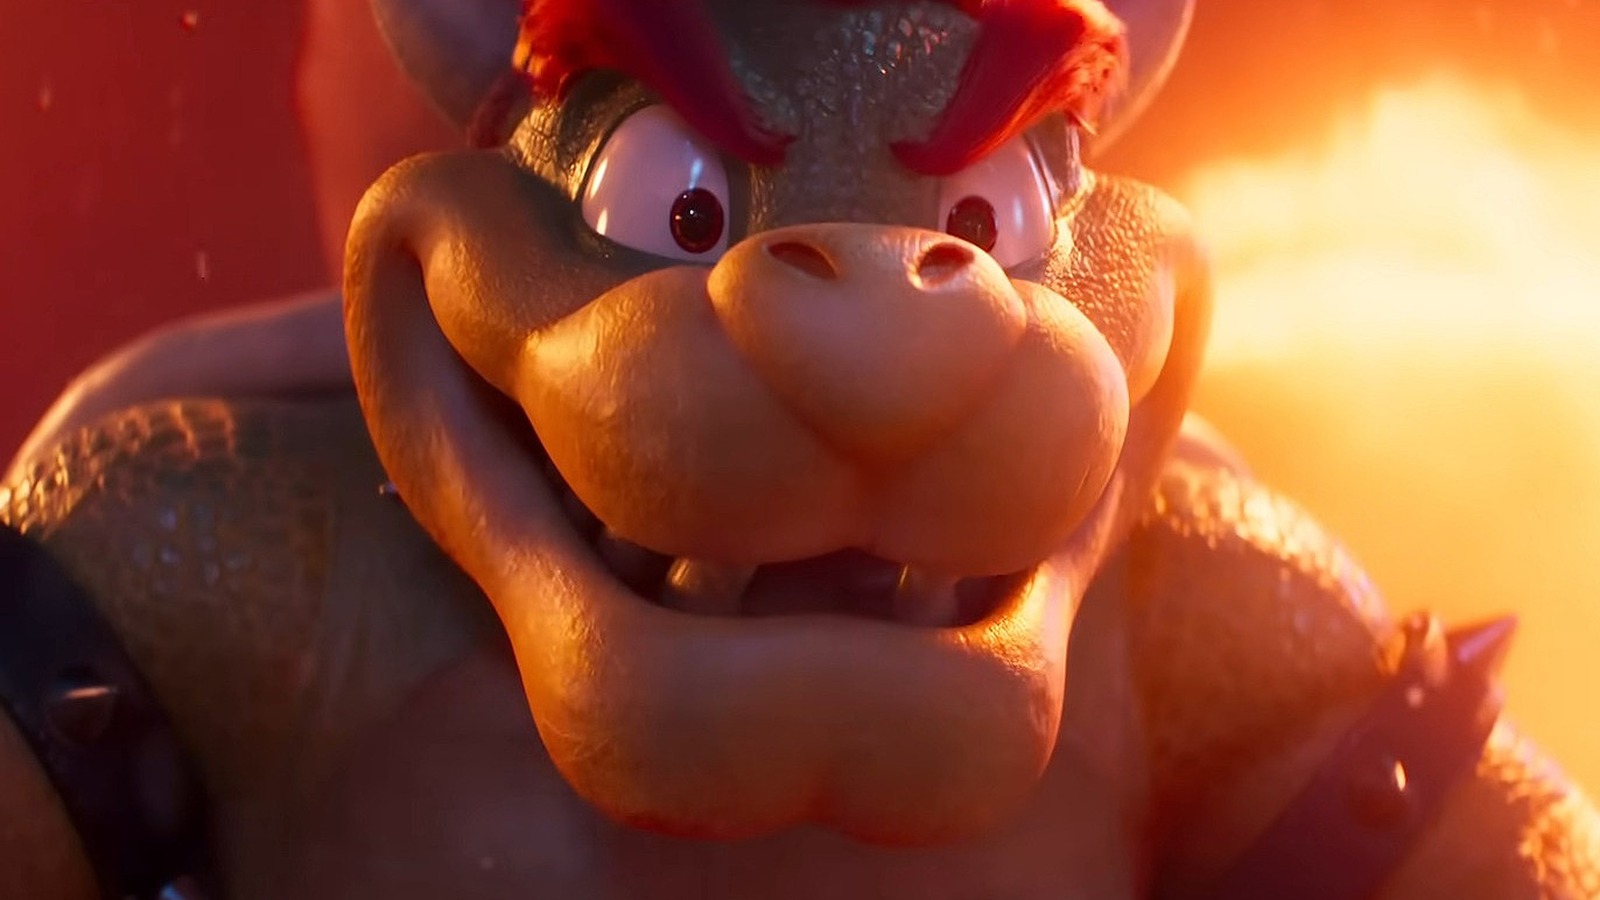 Bowser's Conquest Begins In Final Super Mario Bros. Movie Trailer